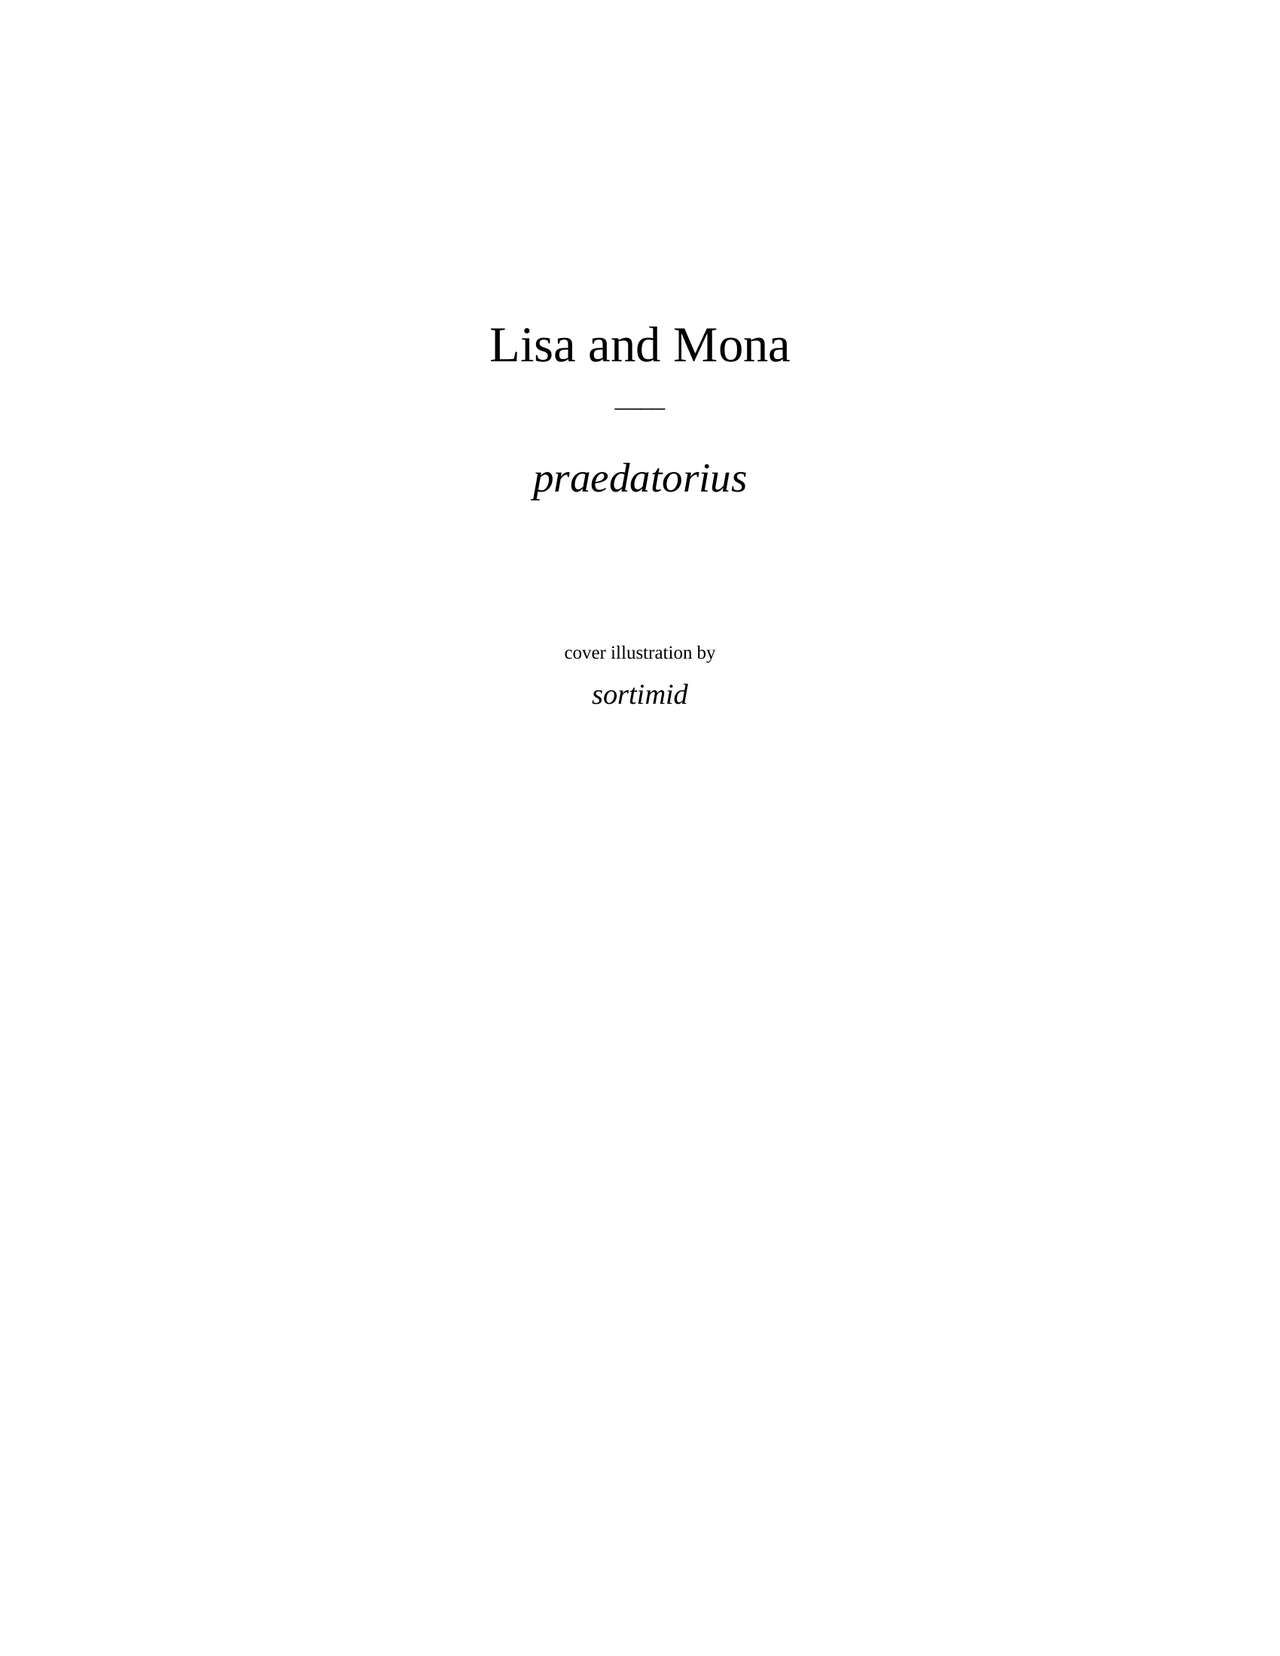 (praedatorius) Lisa and Mona 2